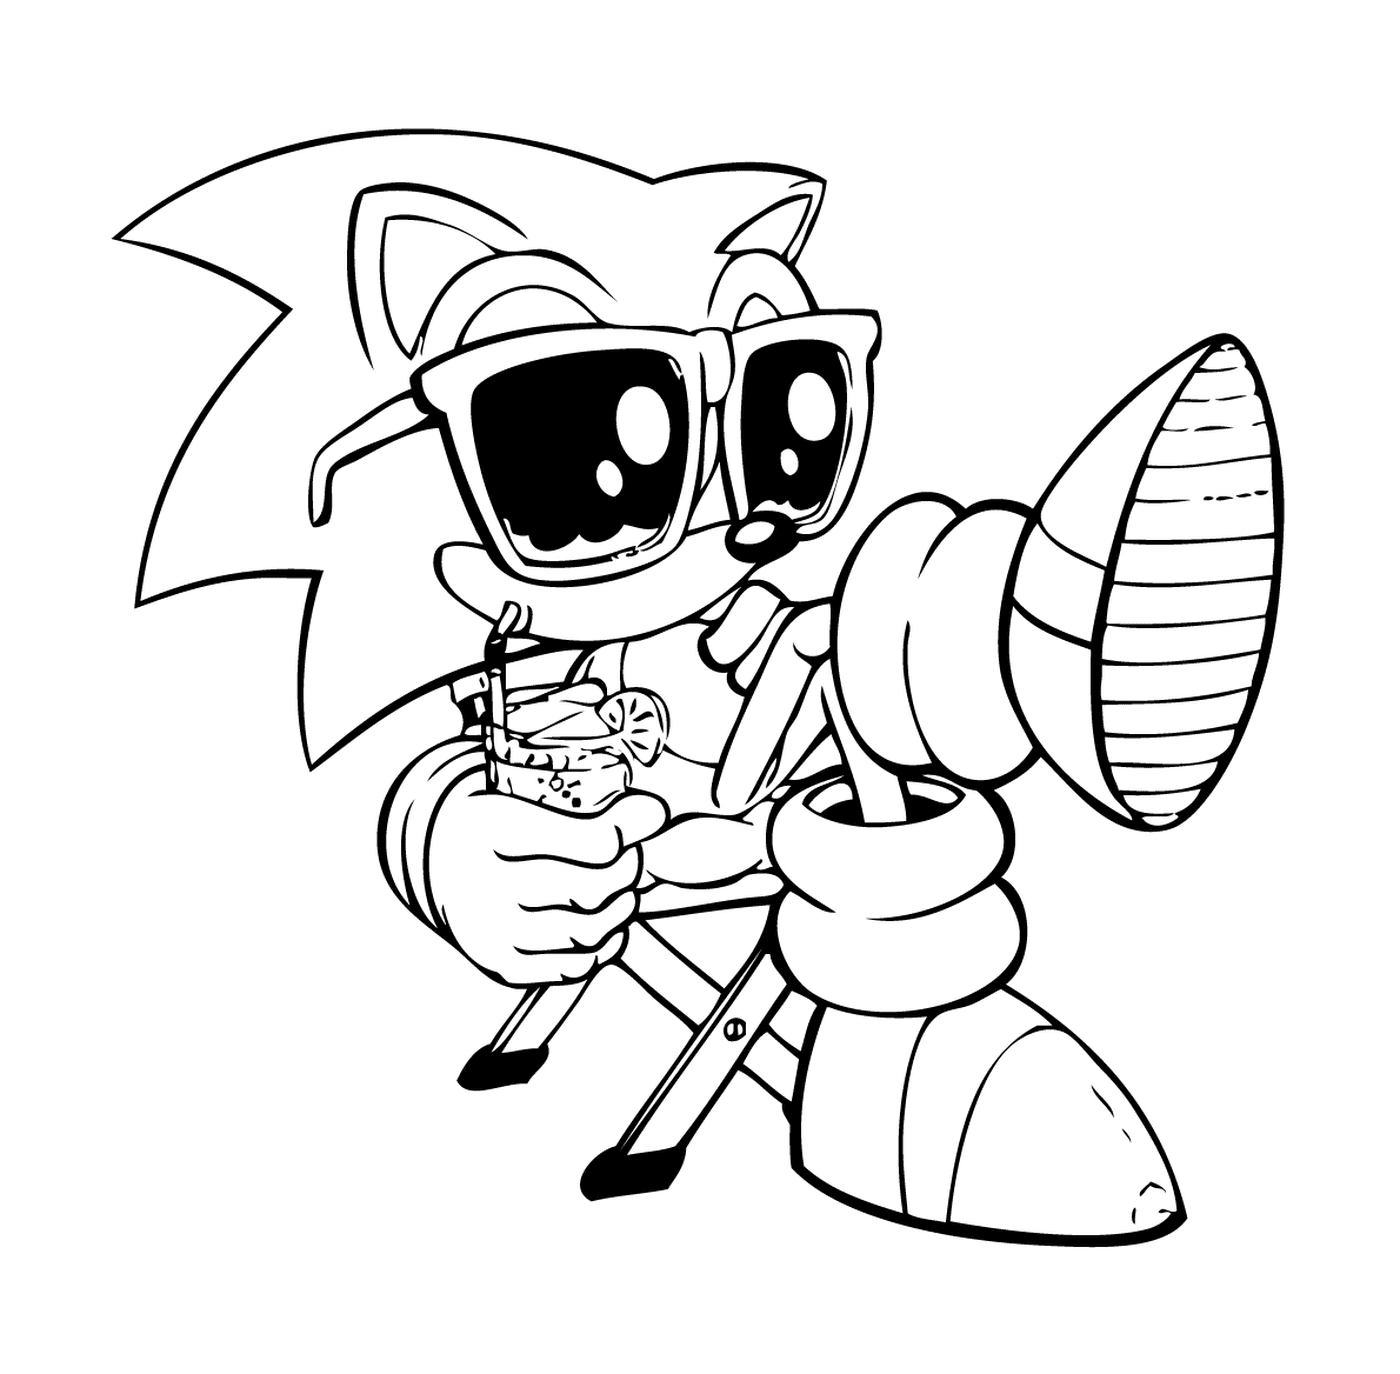  Agile und lebendige Sonic 